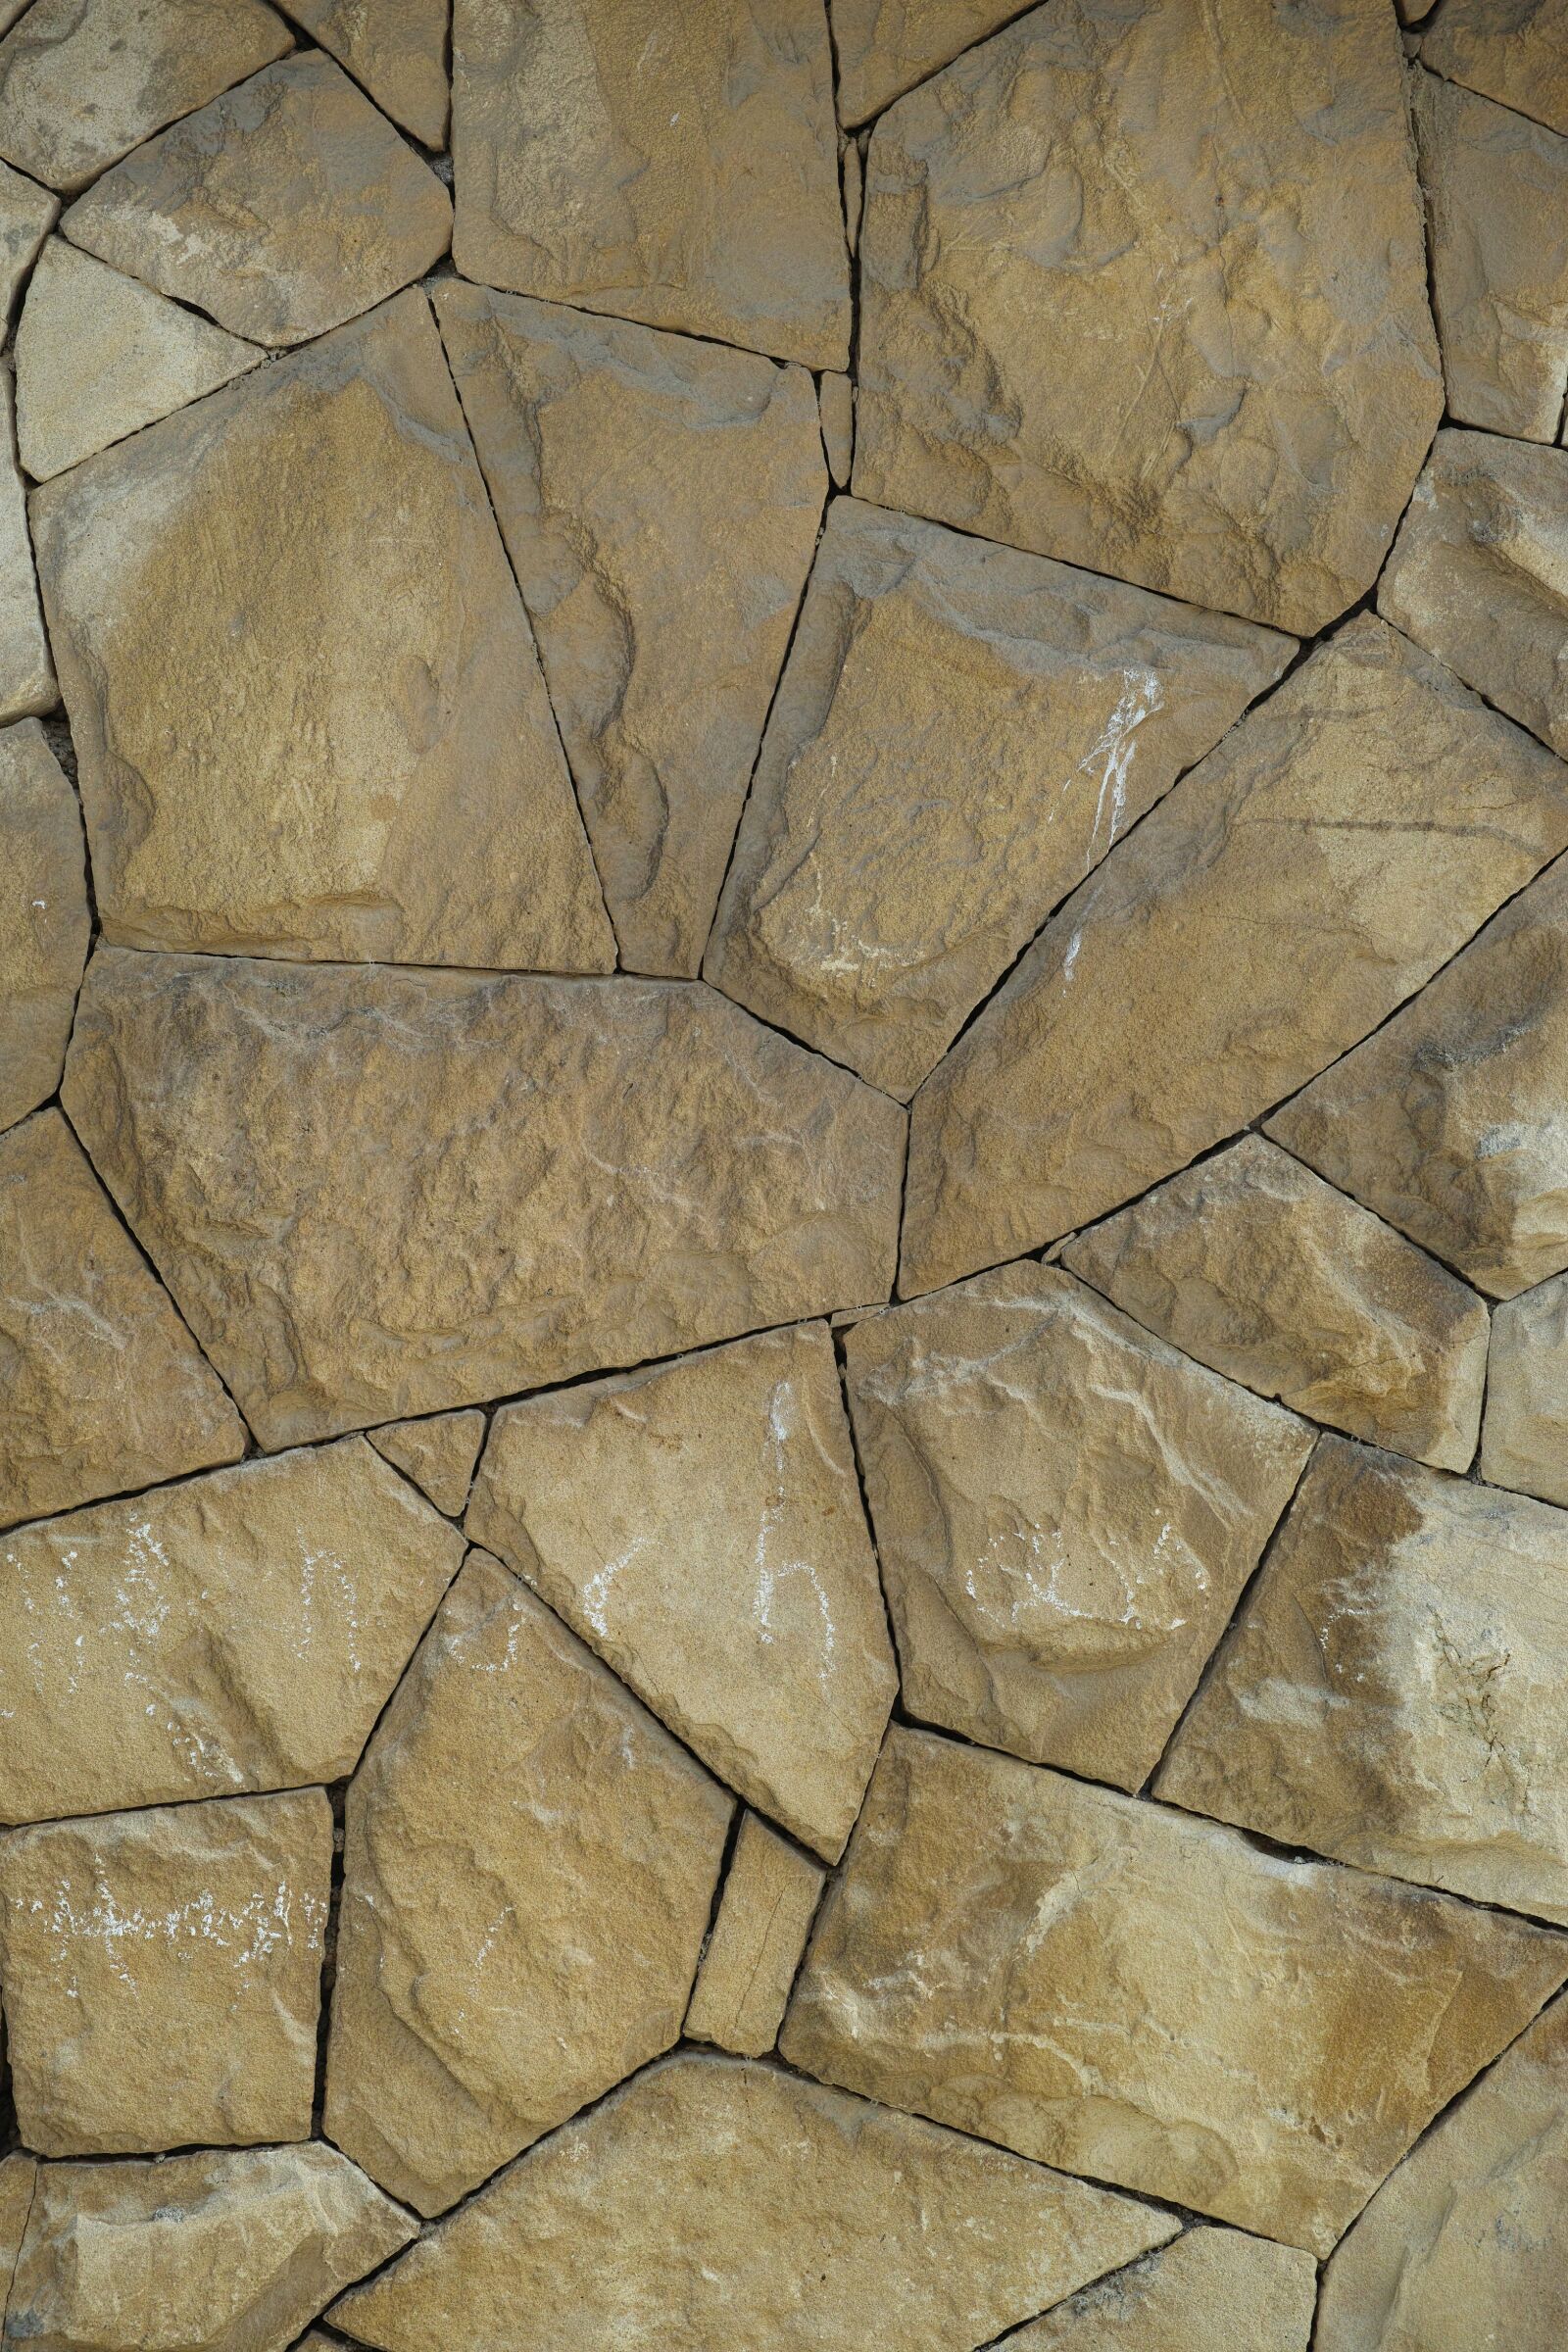 Sigma DP3 Merrill sample photo. Brick, wall, stone photography